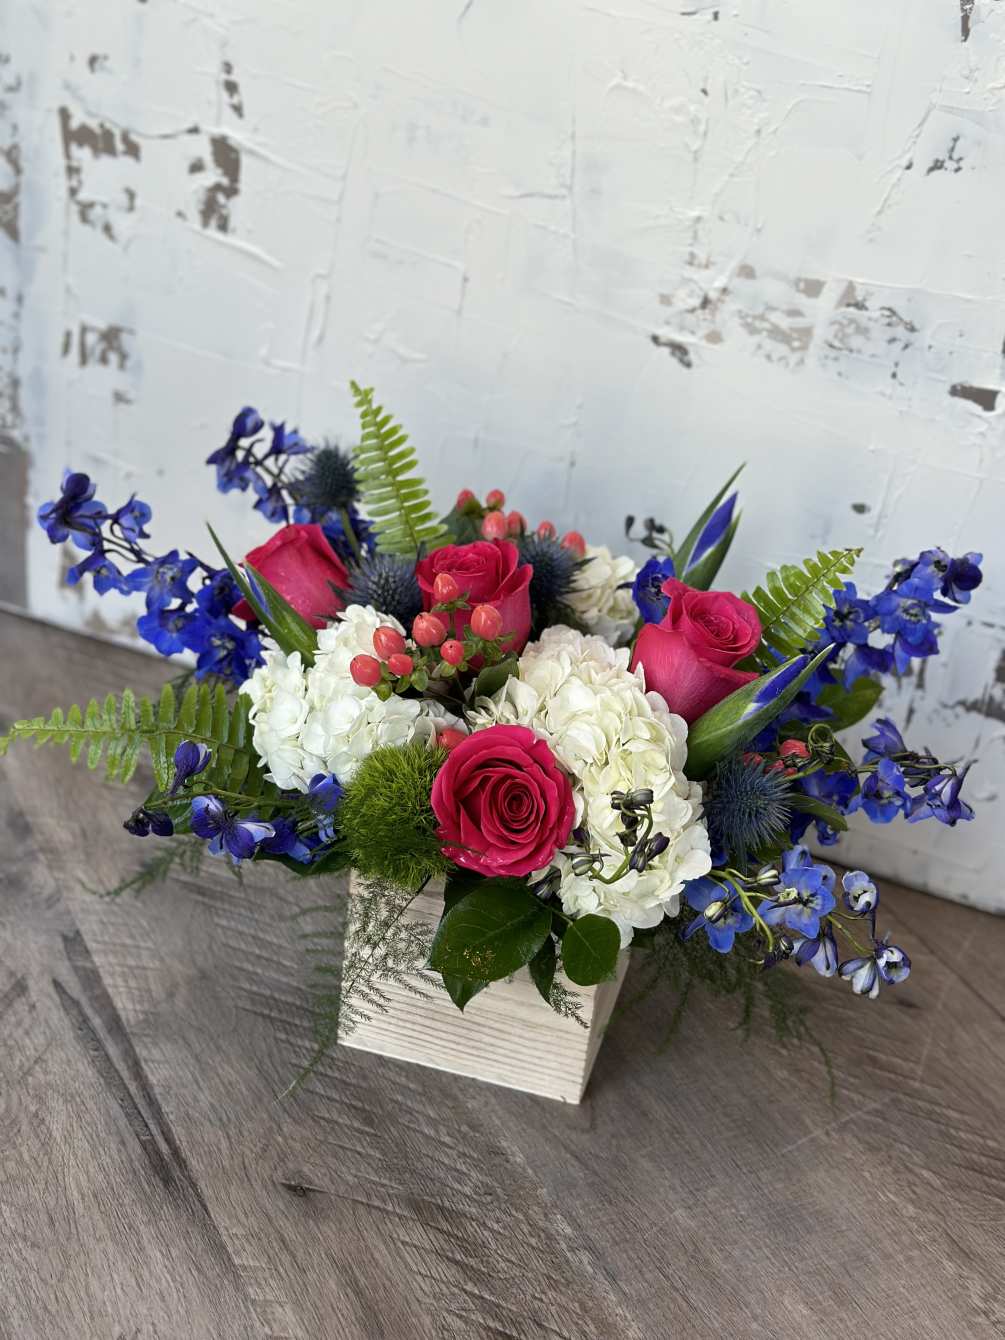 Cabana Flower arrangement features hot pink roses, blue delphinium and white hydrangeas.